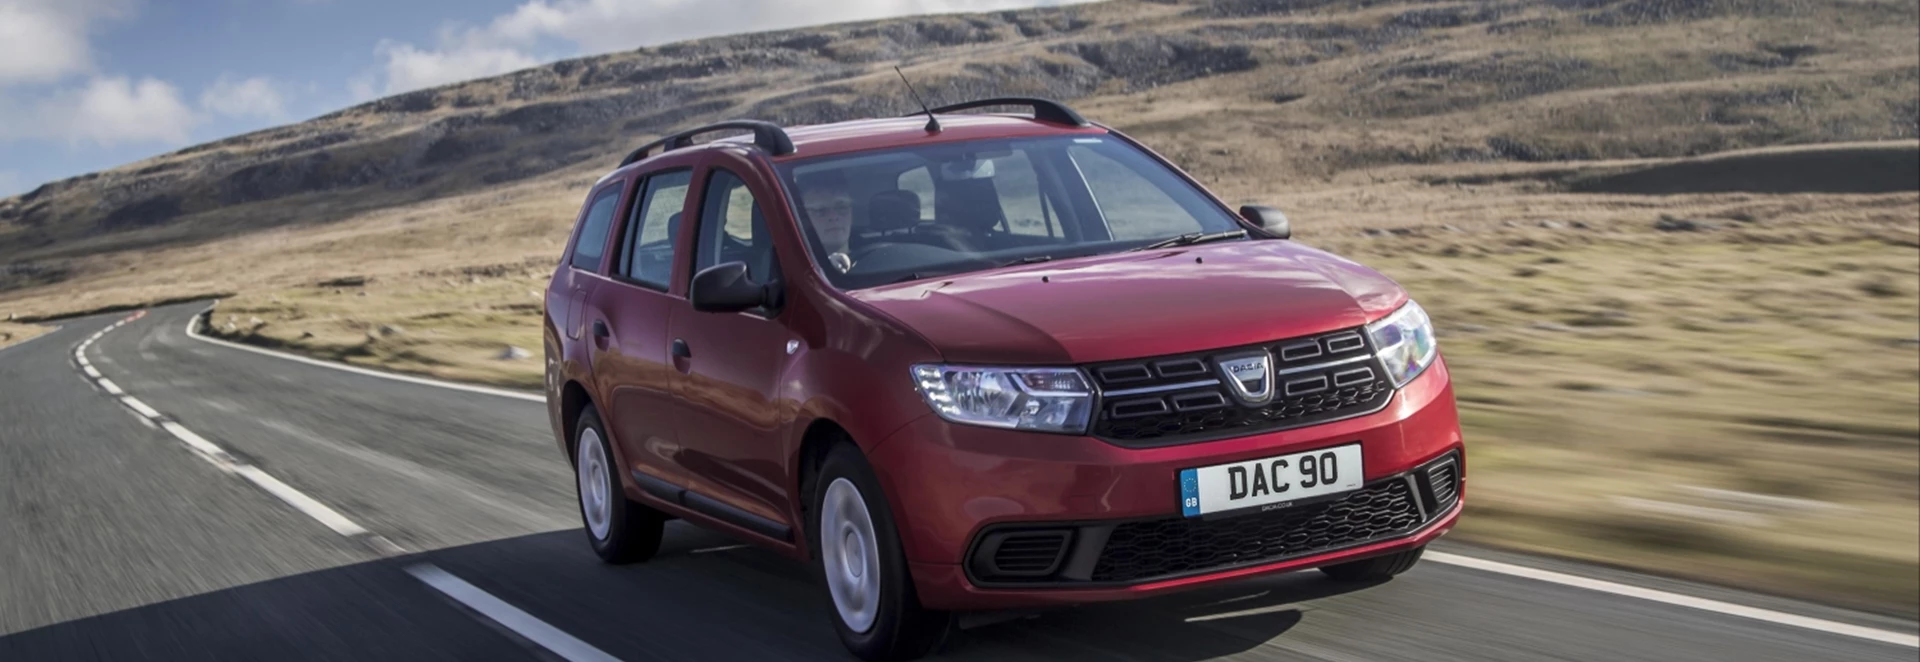 Dacia Logan MCV estate 2020 review